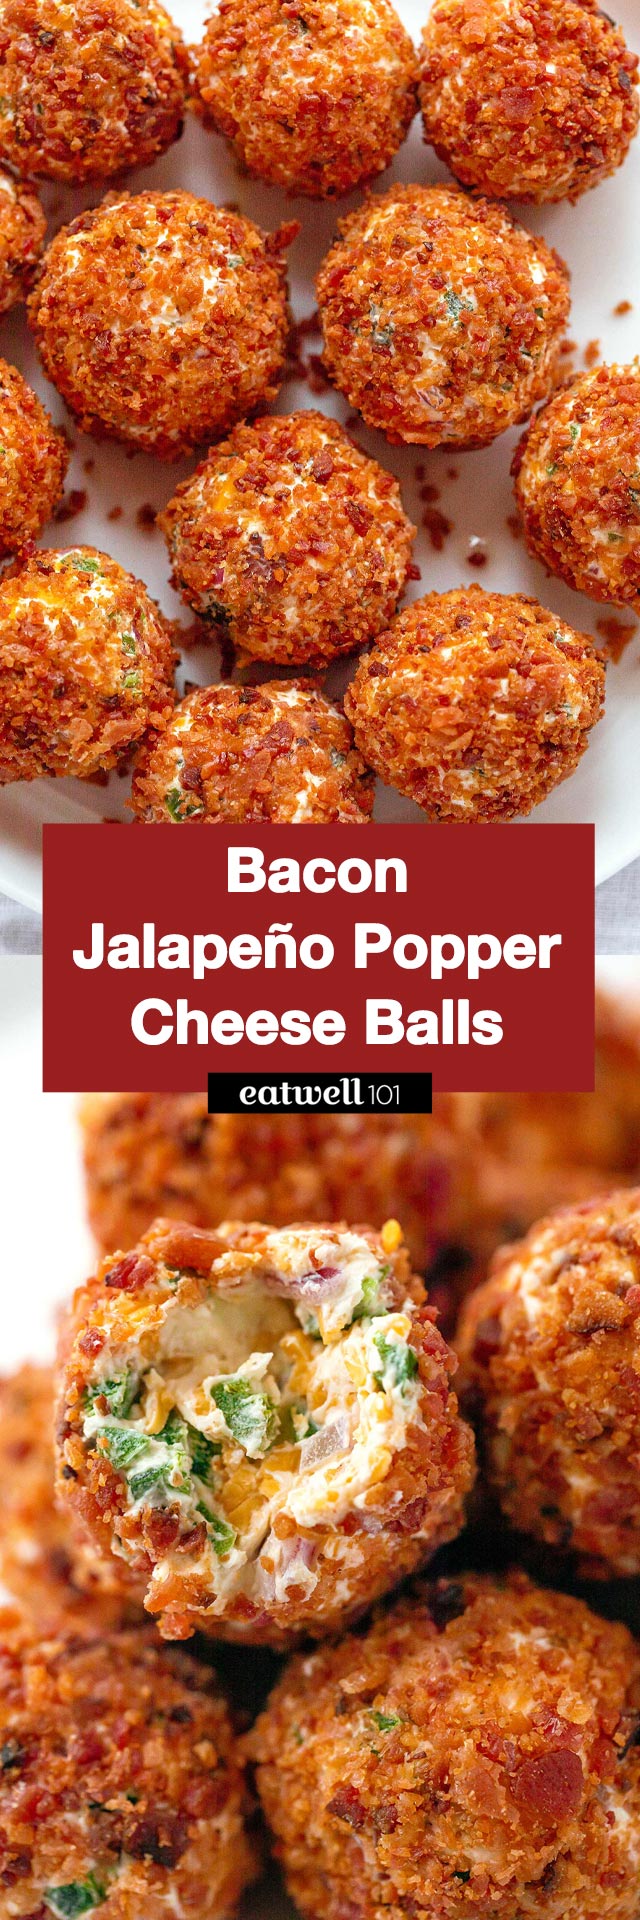 Bacon Jalapeño Popper Cheese Balls - #cheeseball #appetizer #eatwell101 #recipe - These super festive bacon jalapeño popper cheese balls make for a real crowd-pleasing appetizer! 